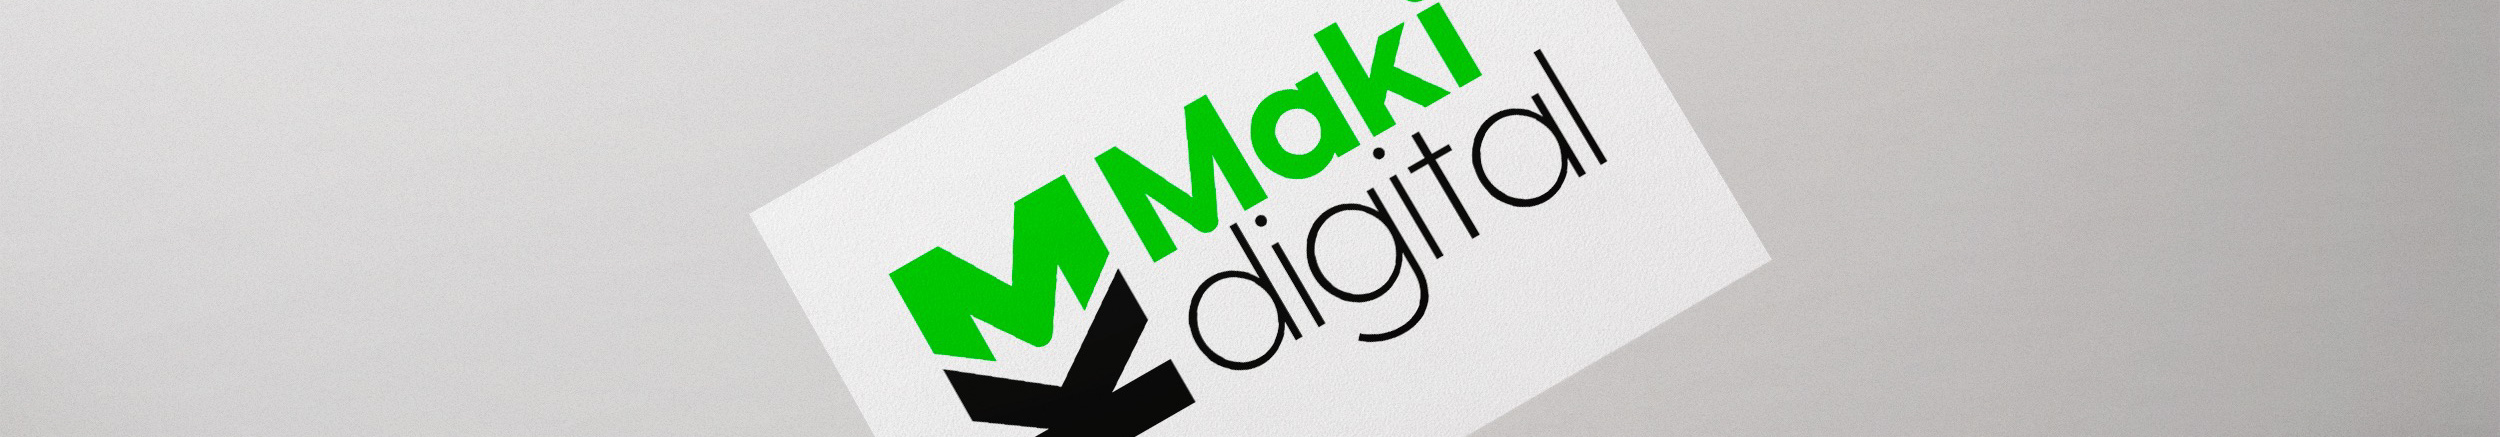 Maki Digital's profile banner